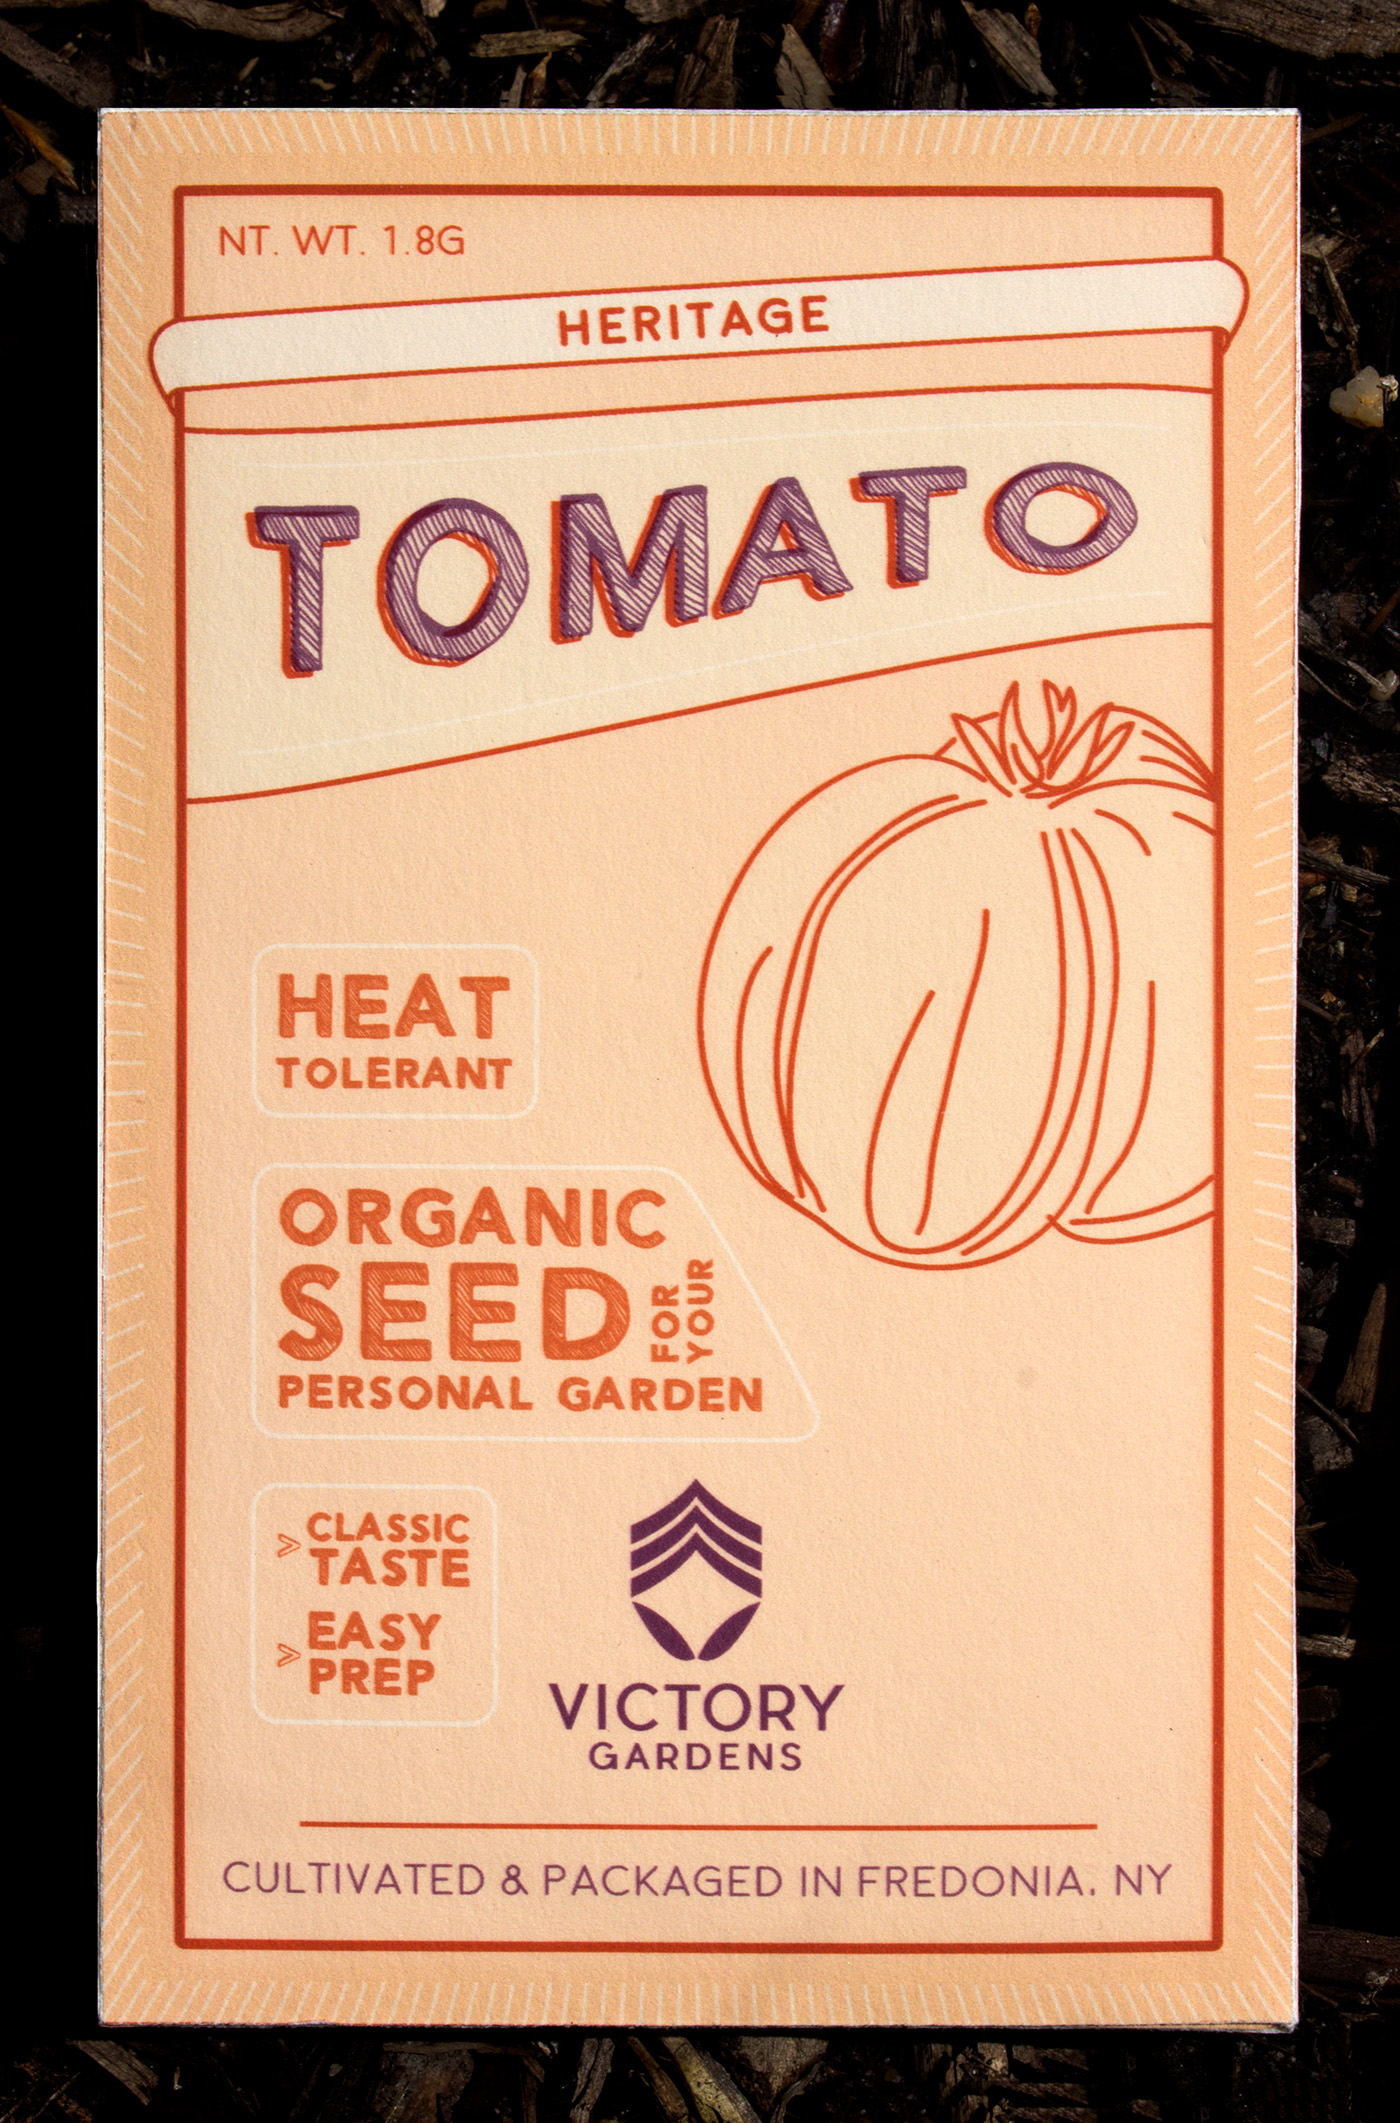 Victory garden eleanor roosevelt Tomato Onion vegetable Herb seed lettuce carrot kit Food 